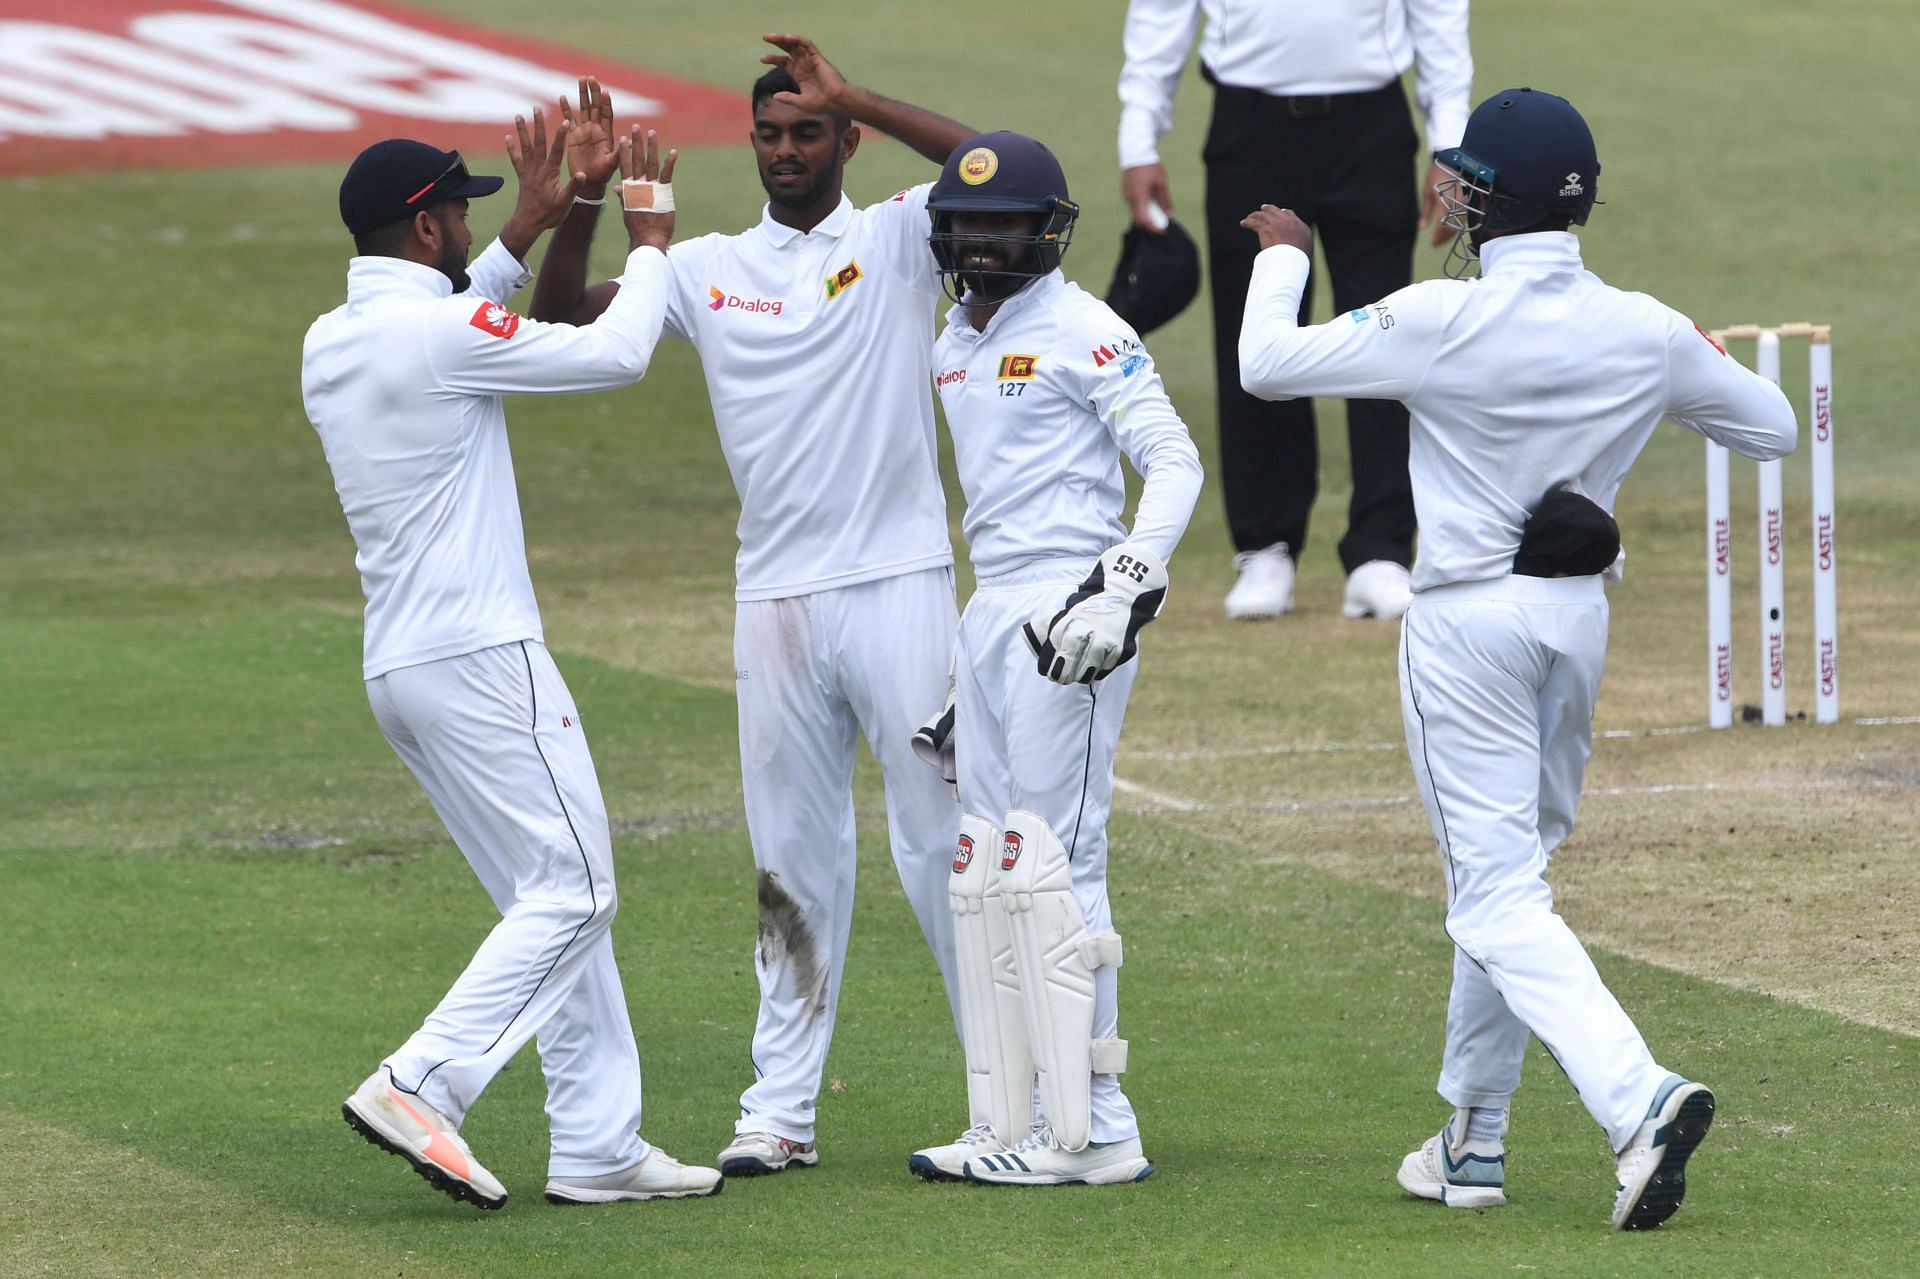 Lasith Embuldeniya in action in the South Africa v Sri Lanka 1st Test (Image courtesy: Getty Images)